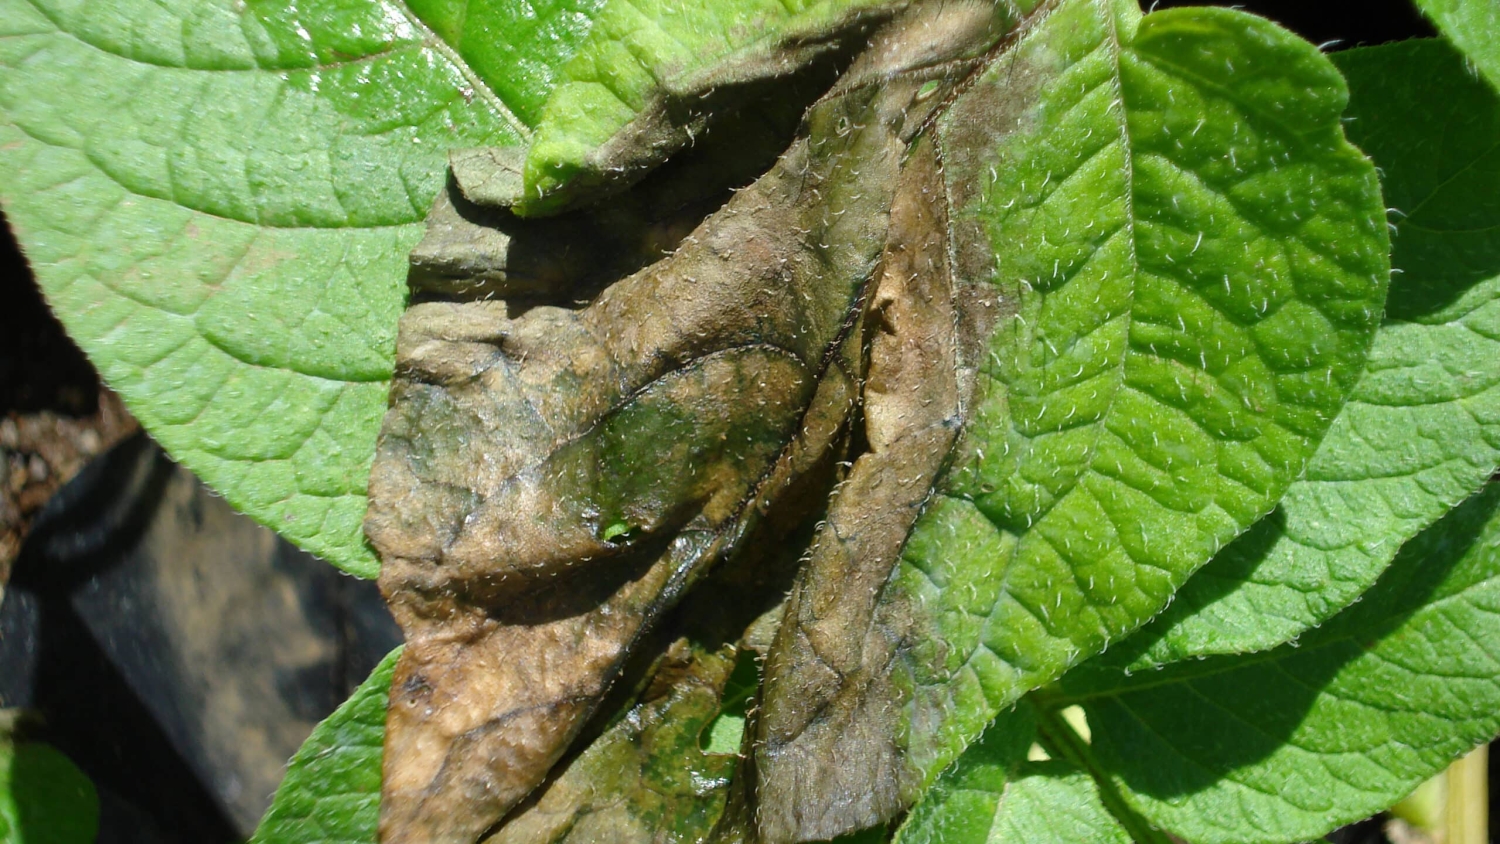 Late blight disease on potato leaf.